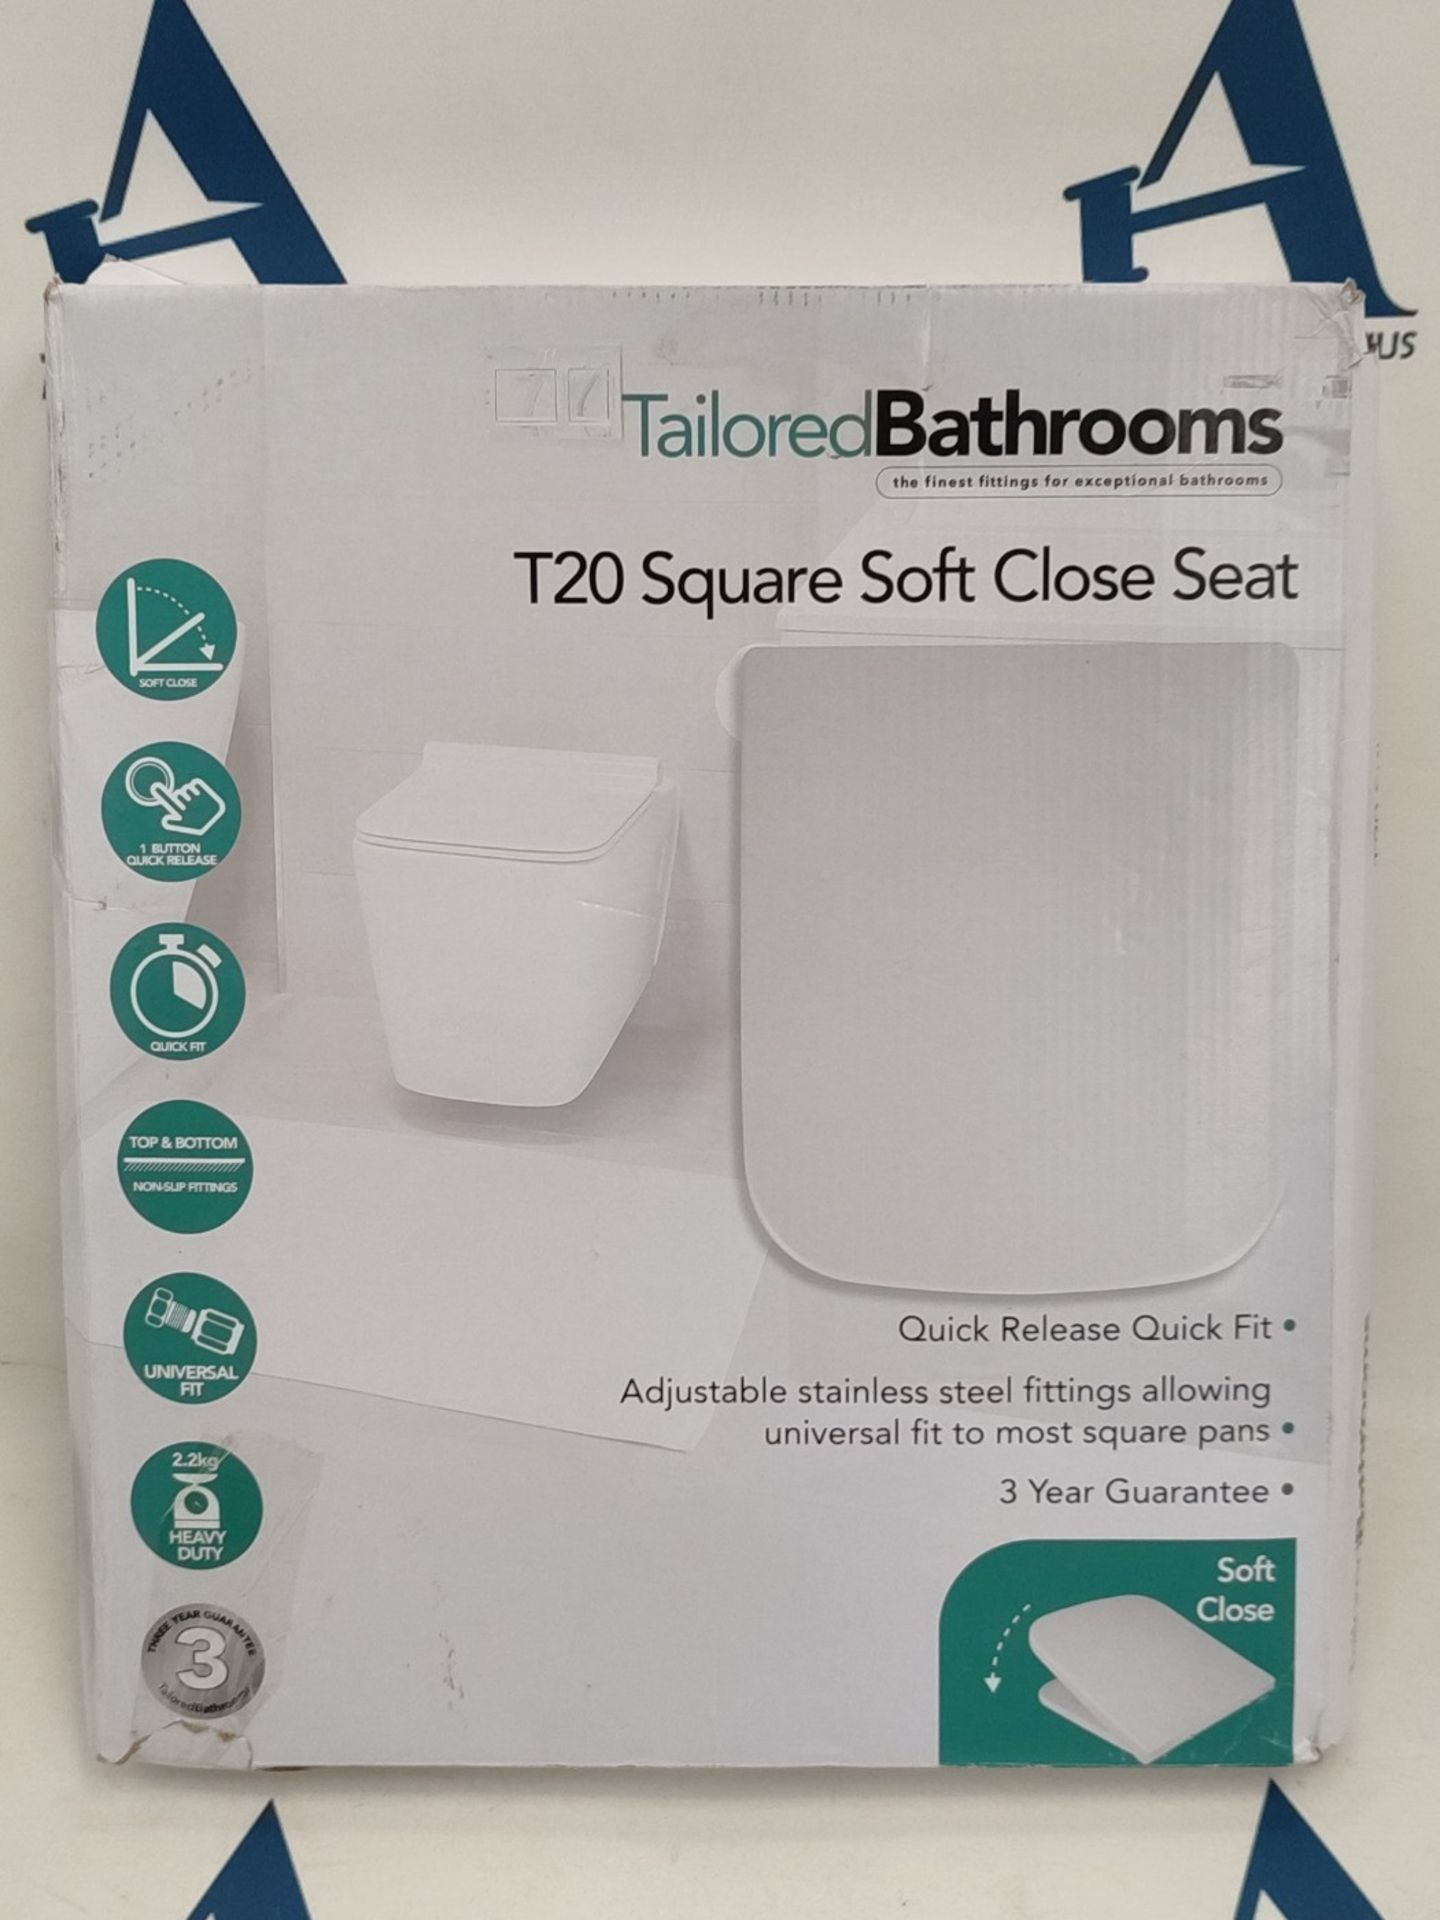 Tailored Bathrooms TIS6103 T20 Square Toilet Seat, White - Image 2 of 3